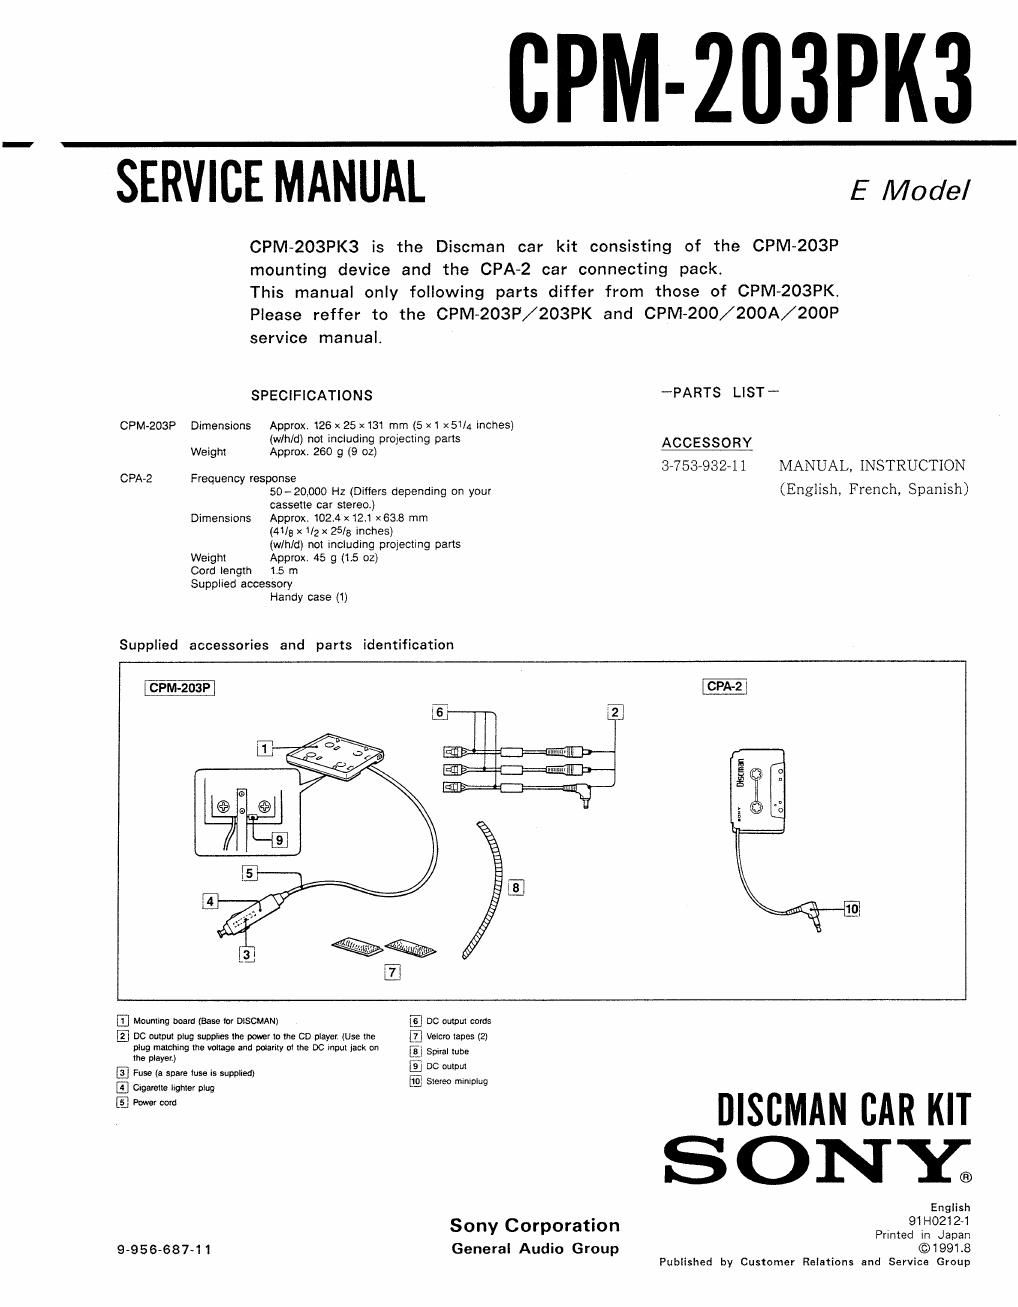 sony cpm 203 pk 3 service manual